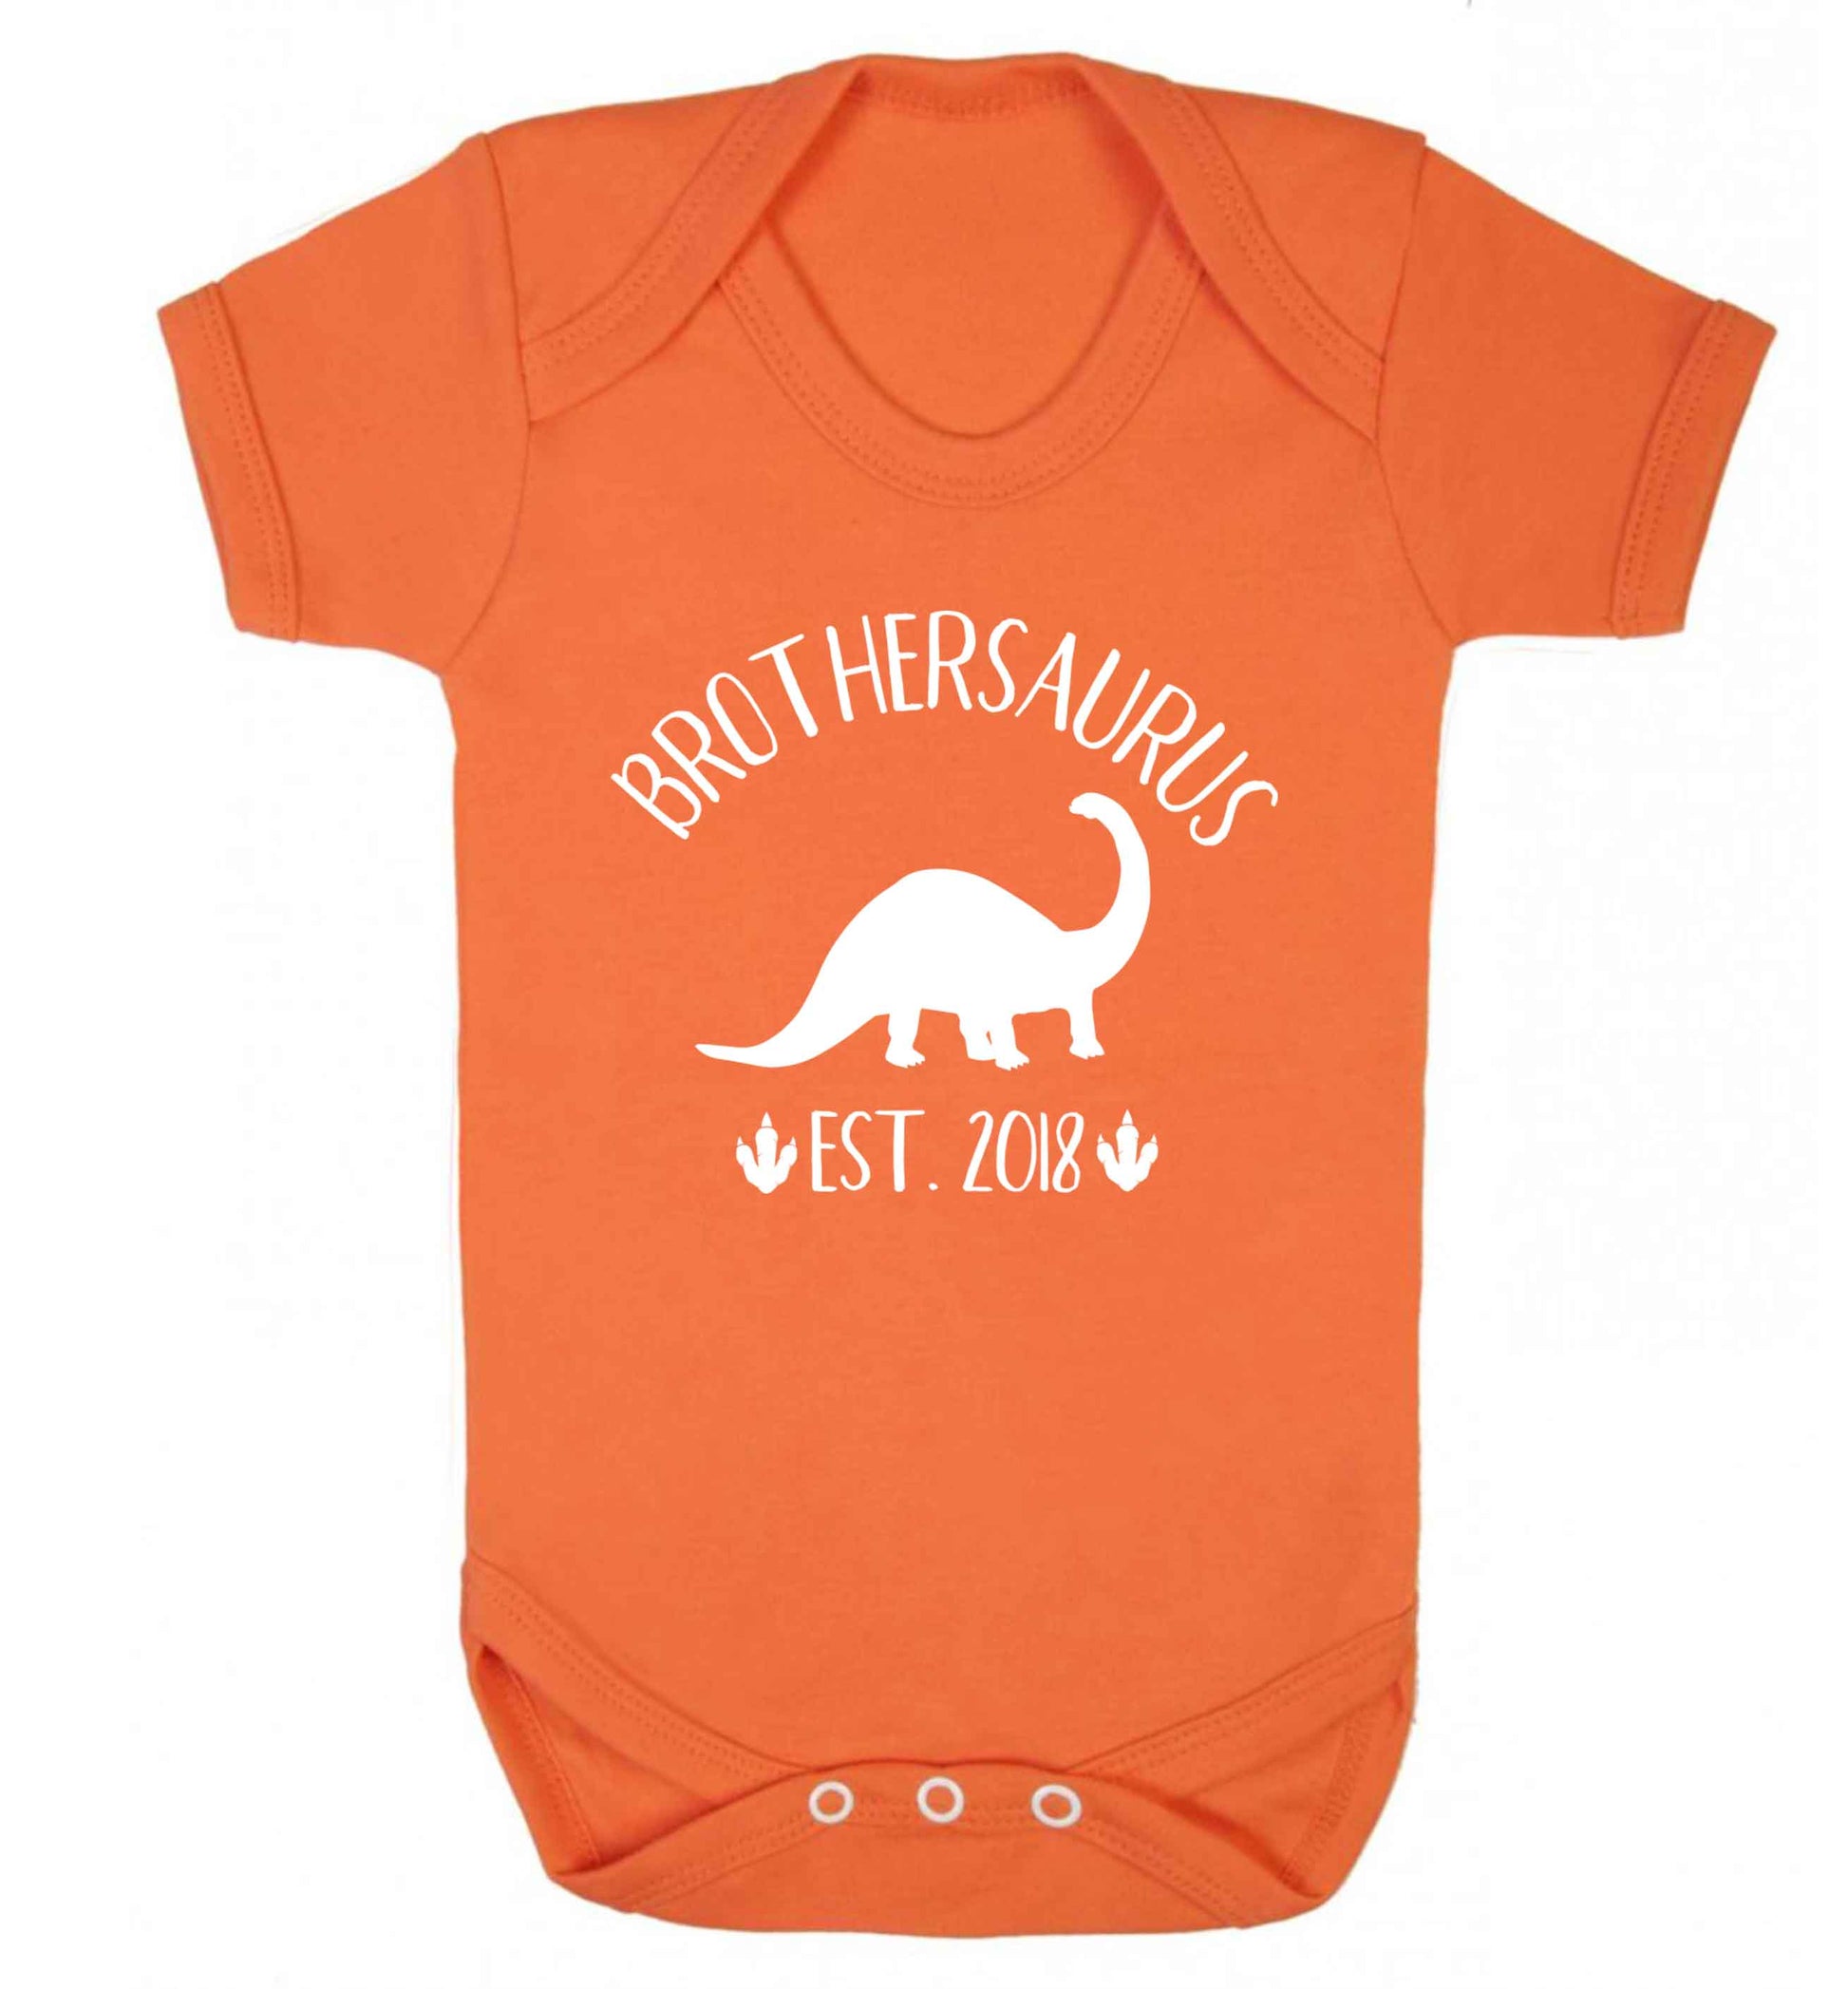 Personalised brothersaurus since (custom date) Baby Vest orange 18-24 months